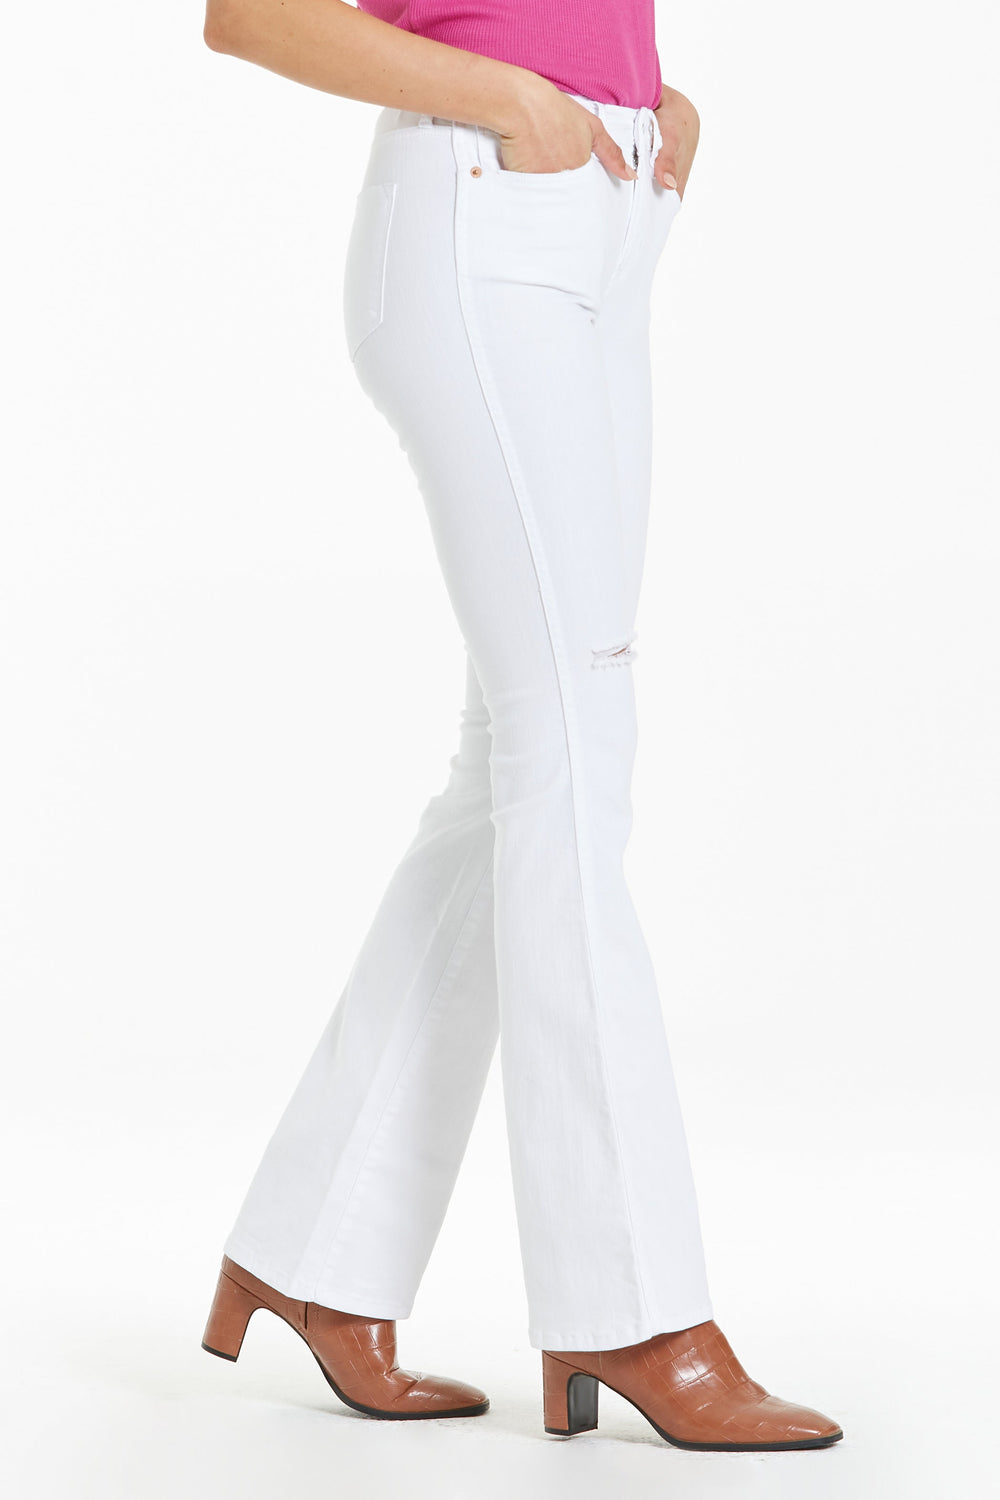 image of a female model wearing a JAXTYN HIGH RISE BOOTCUT JEANS OPTIC WHITE DEAR JOHN DENIM 